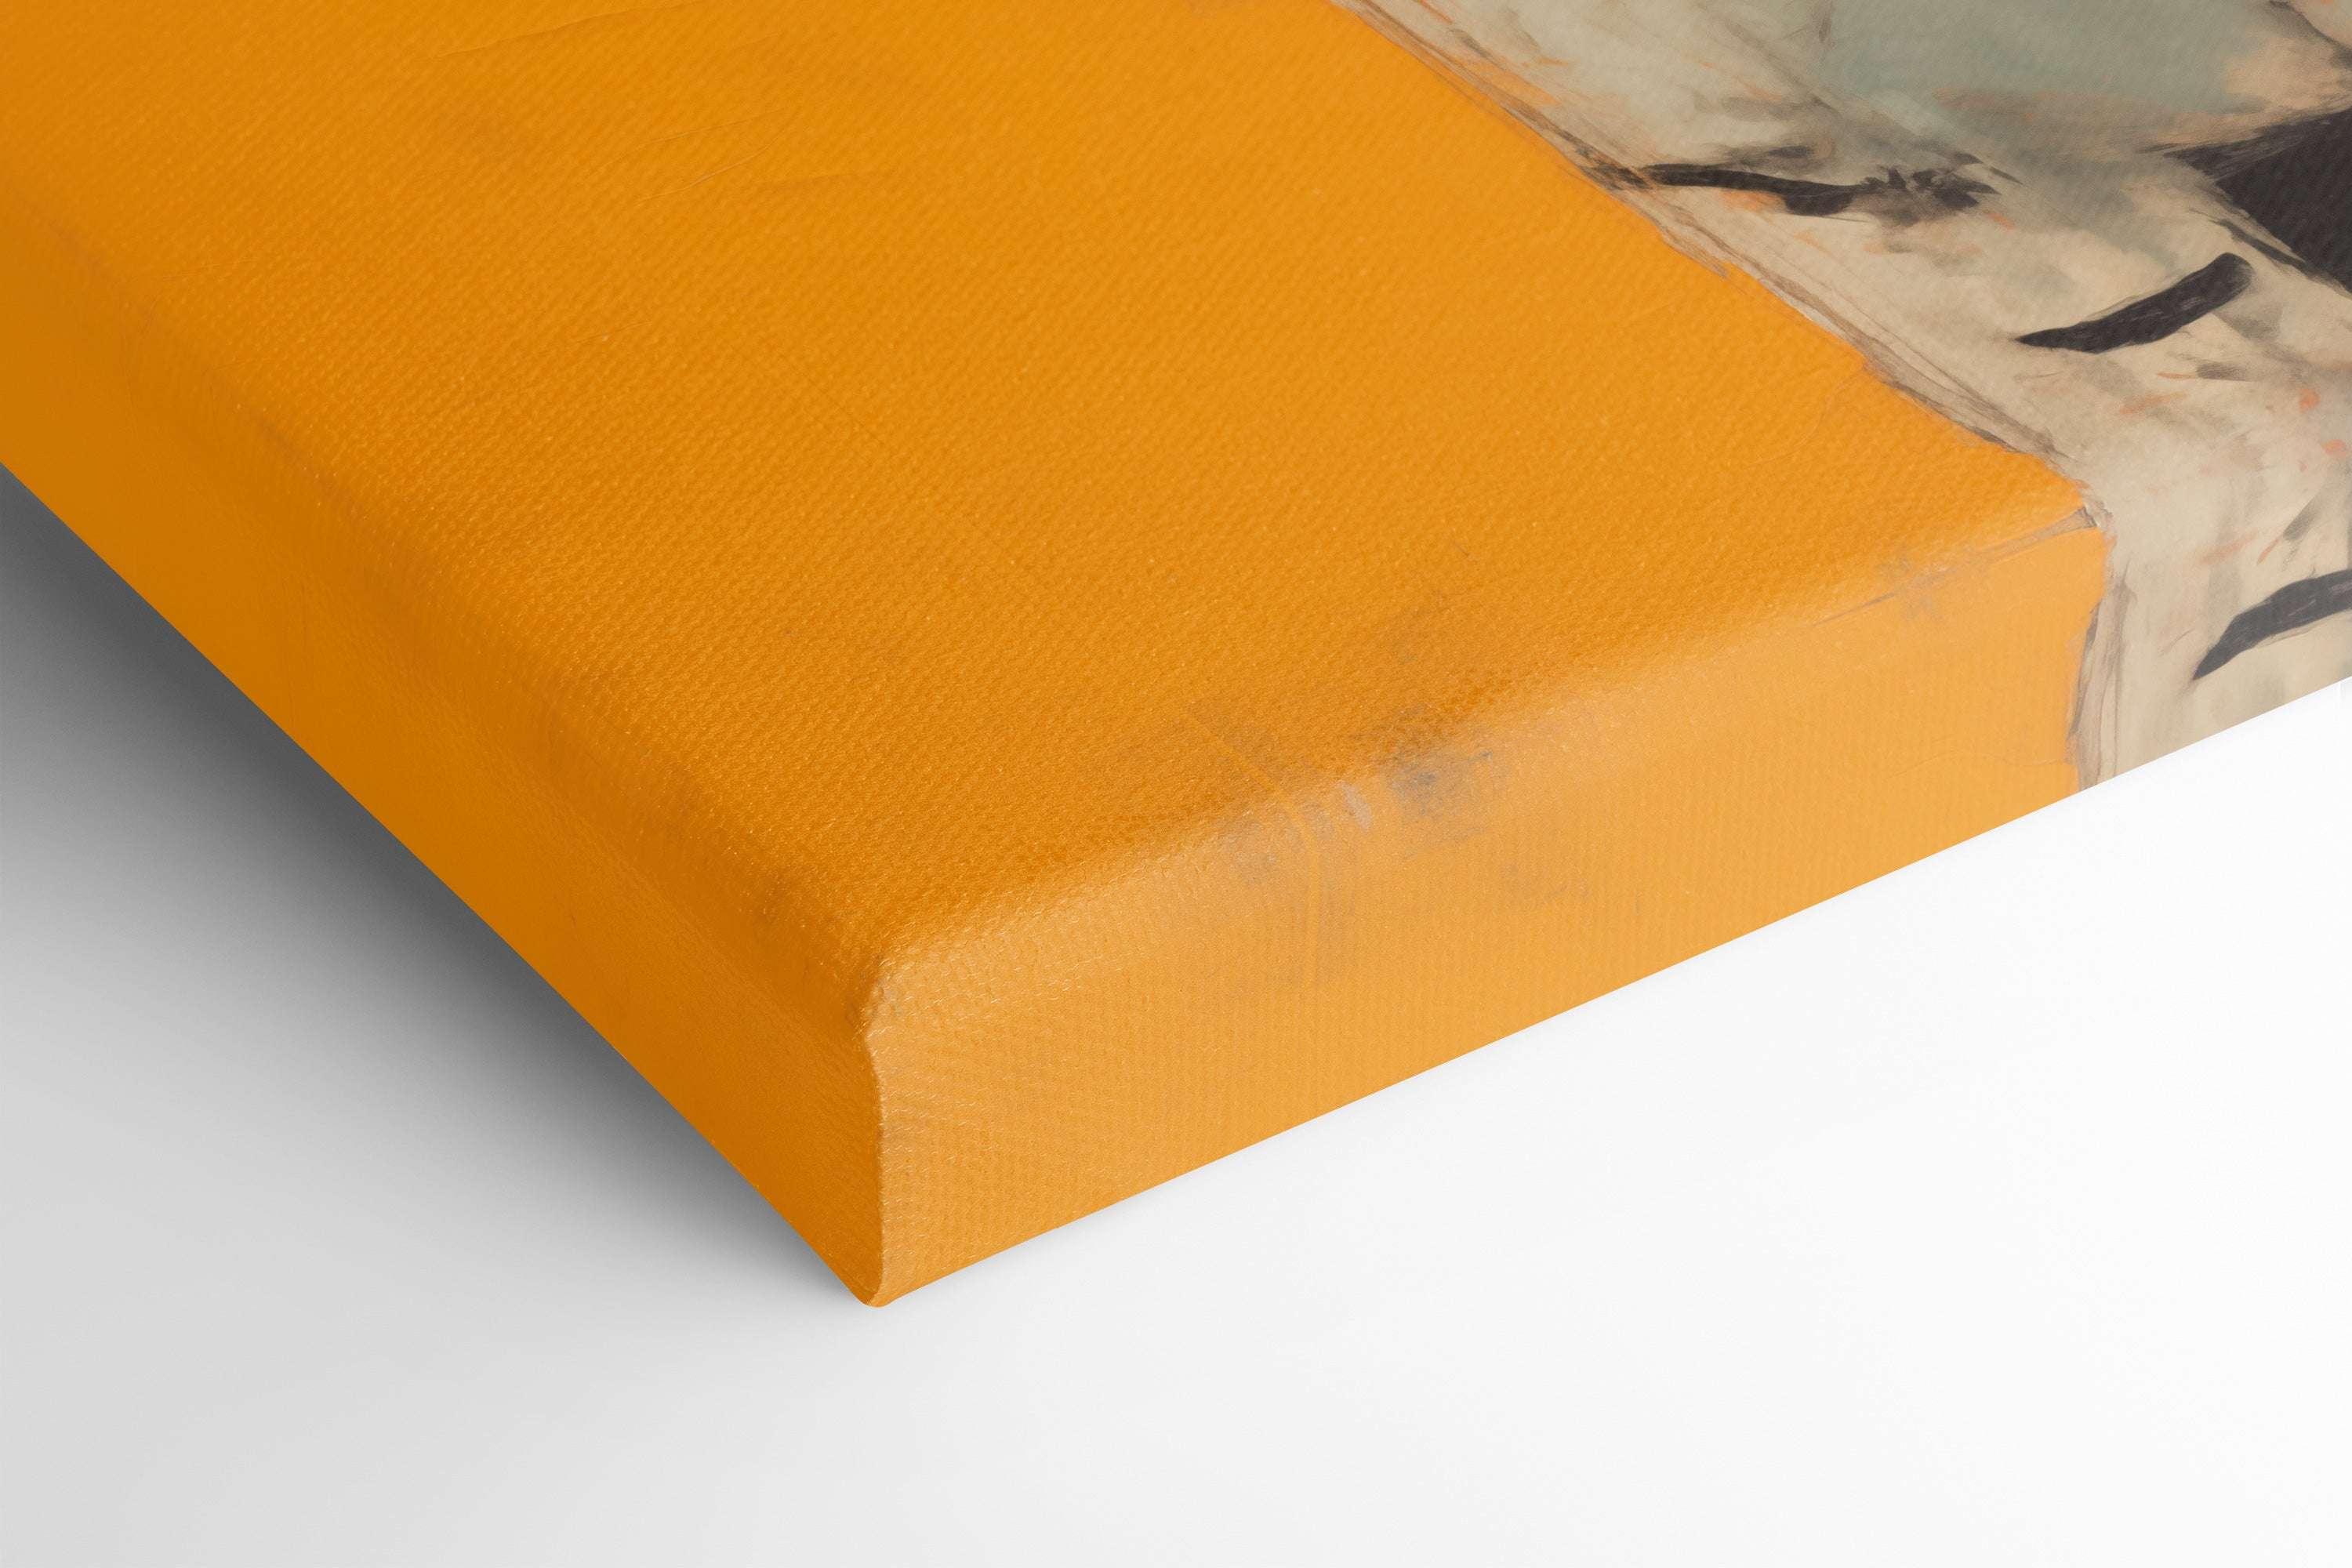 Majestic Wild Tiger on Vibrant Orange - Canvas Print - Artoholica Ready to Hang Canvas Print